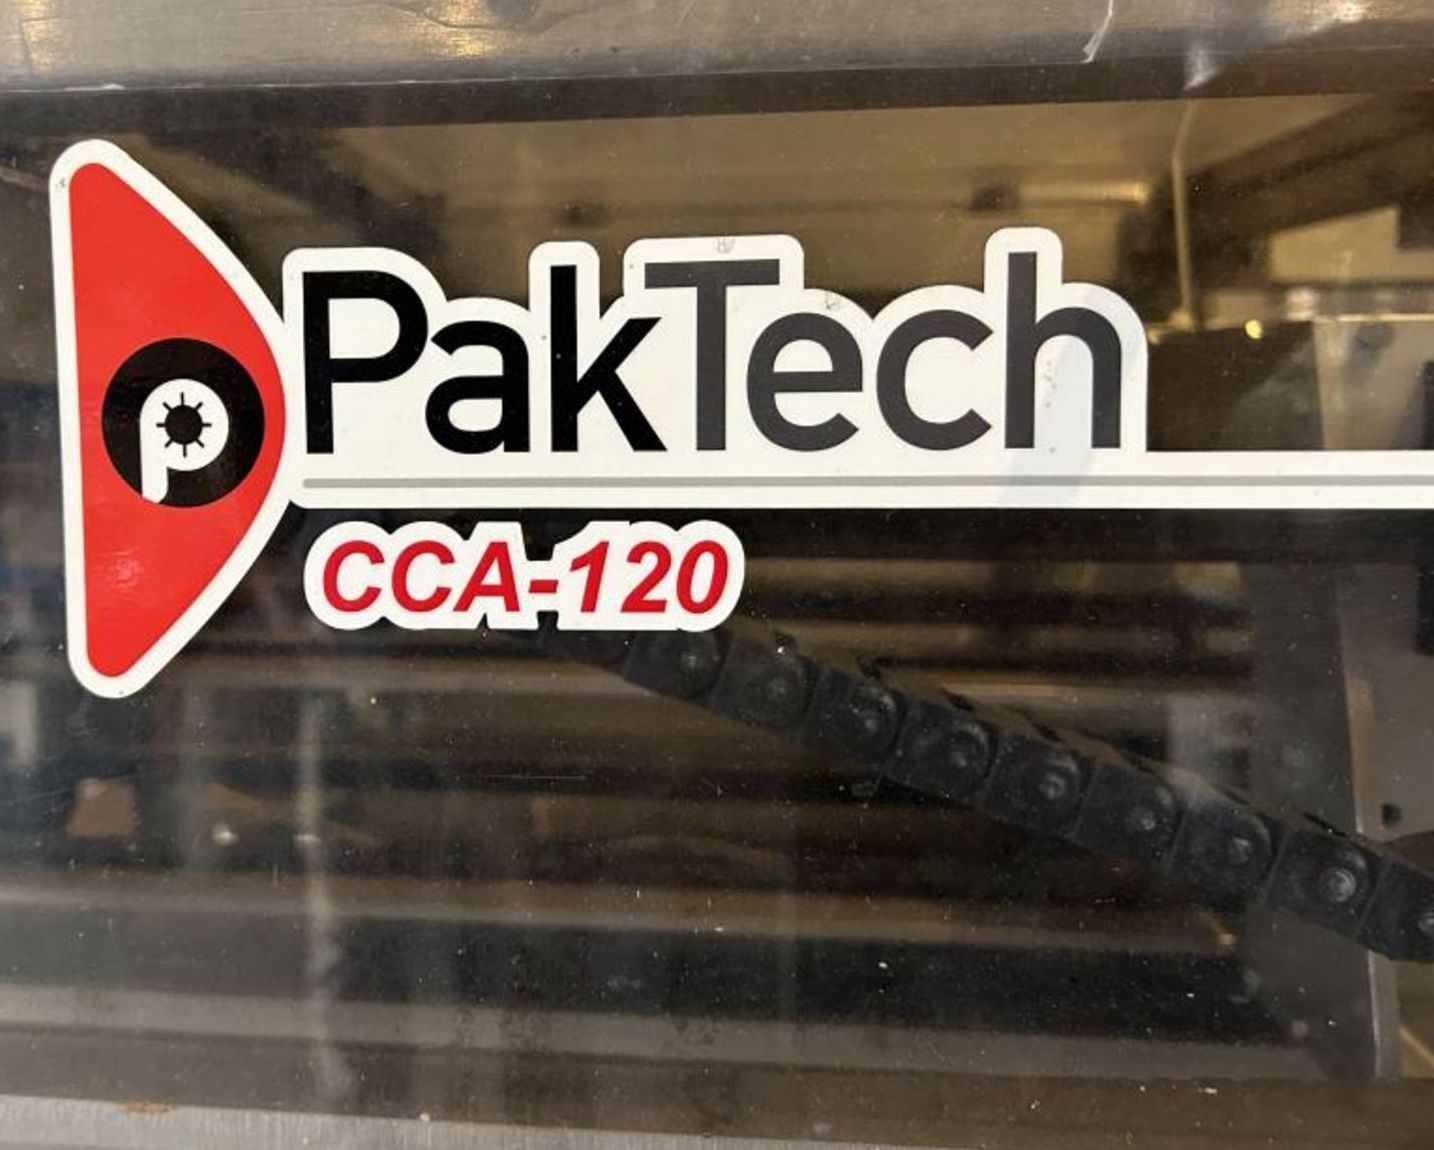 PakTech CCA-120 PakTech automatic can carrier applicator